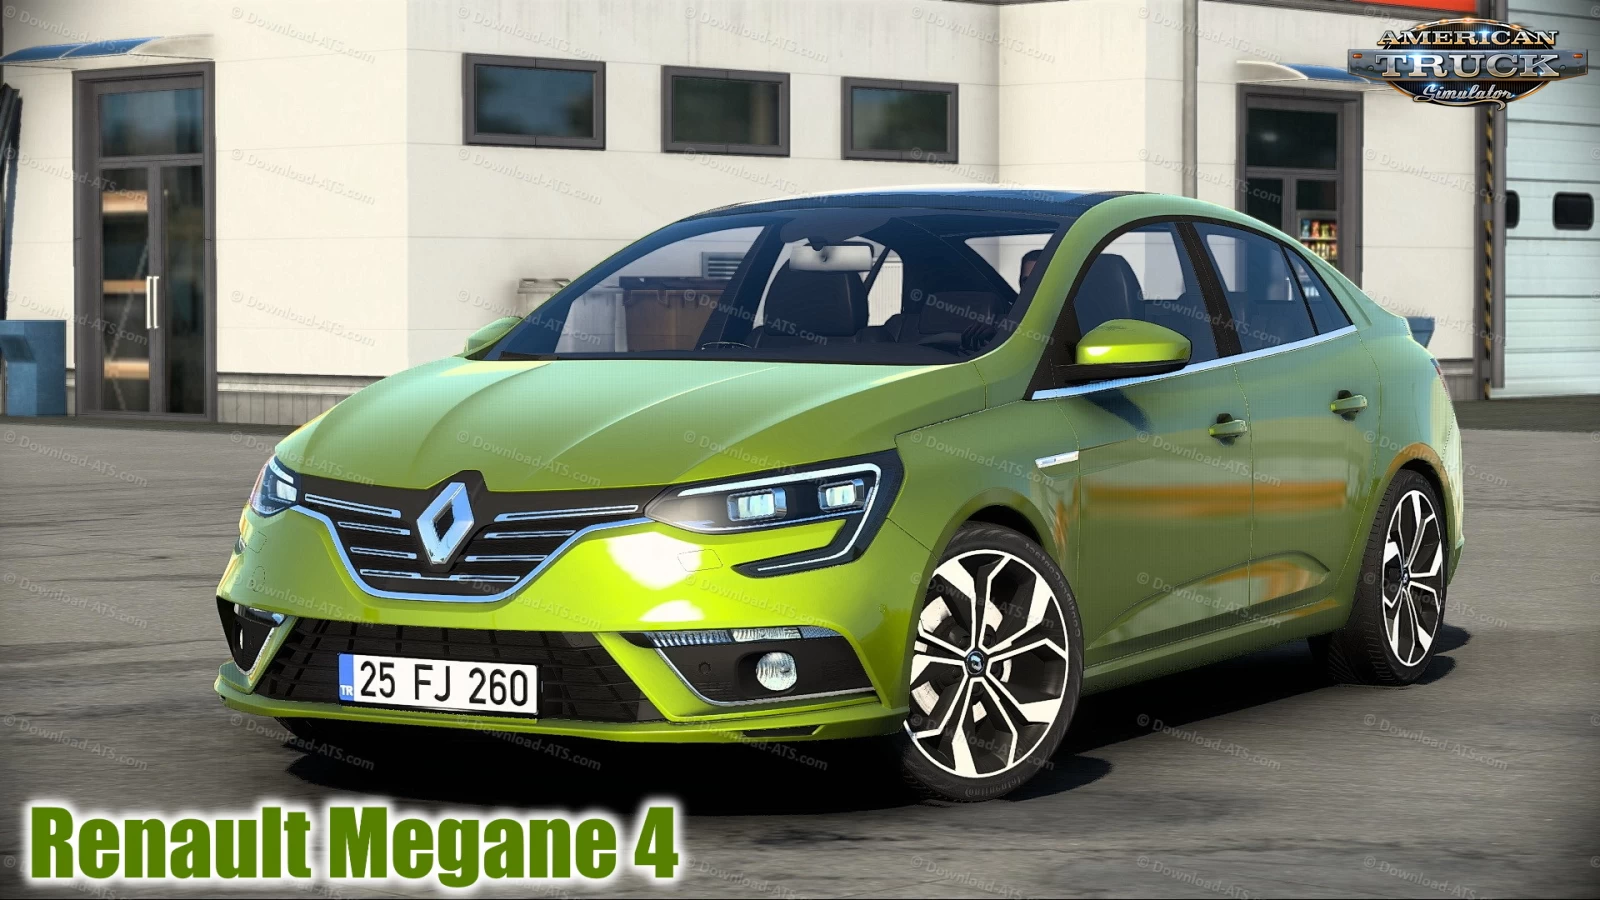 Renault Megane 4 + Interior v2.4 (1.48.x) for ATS